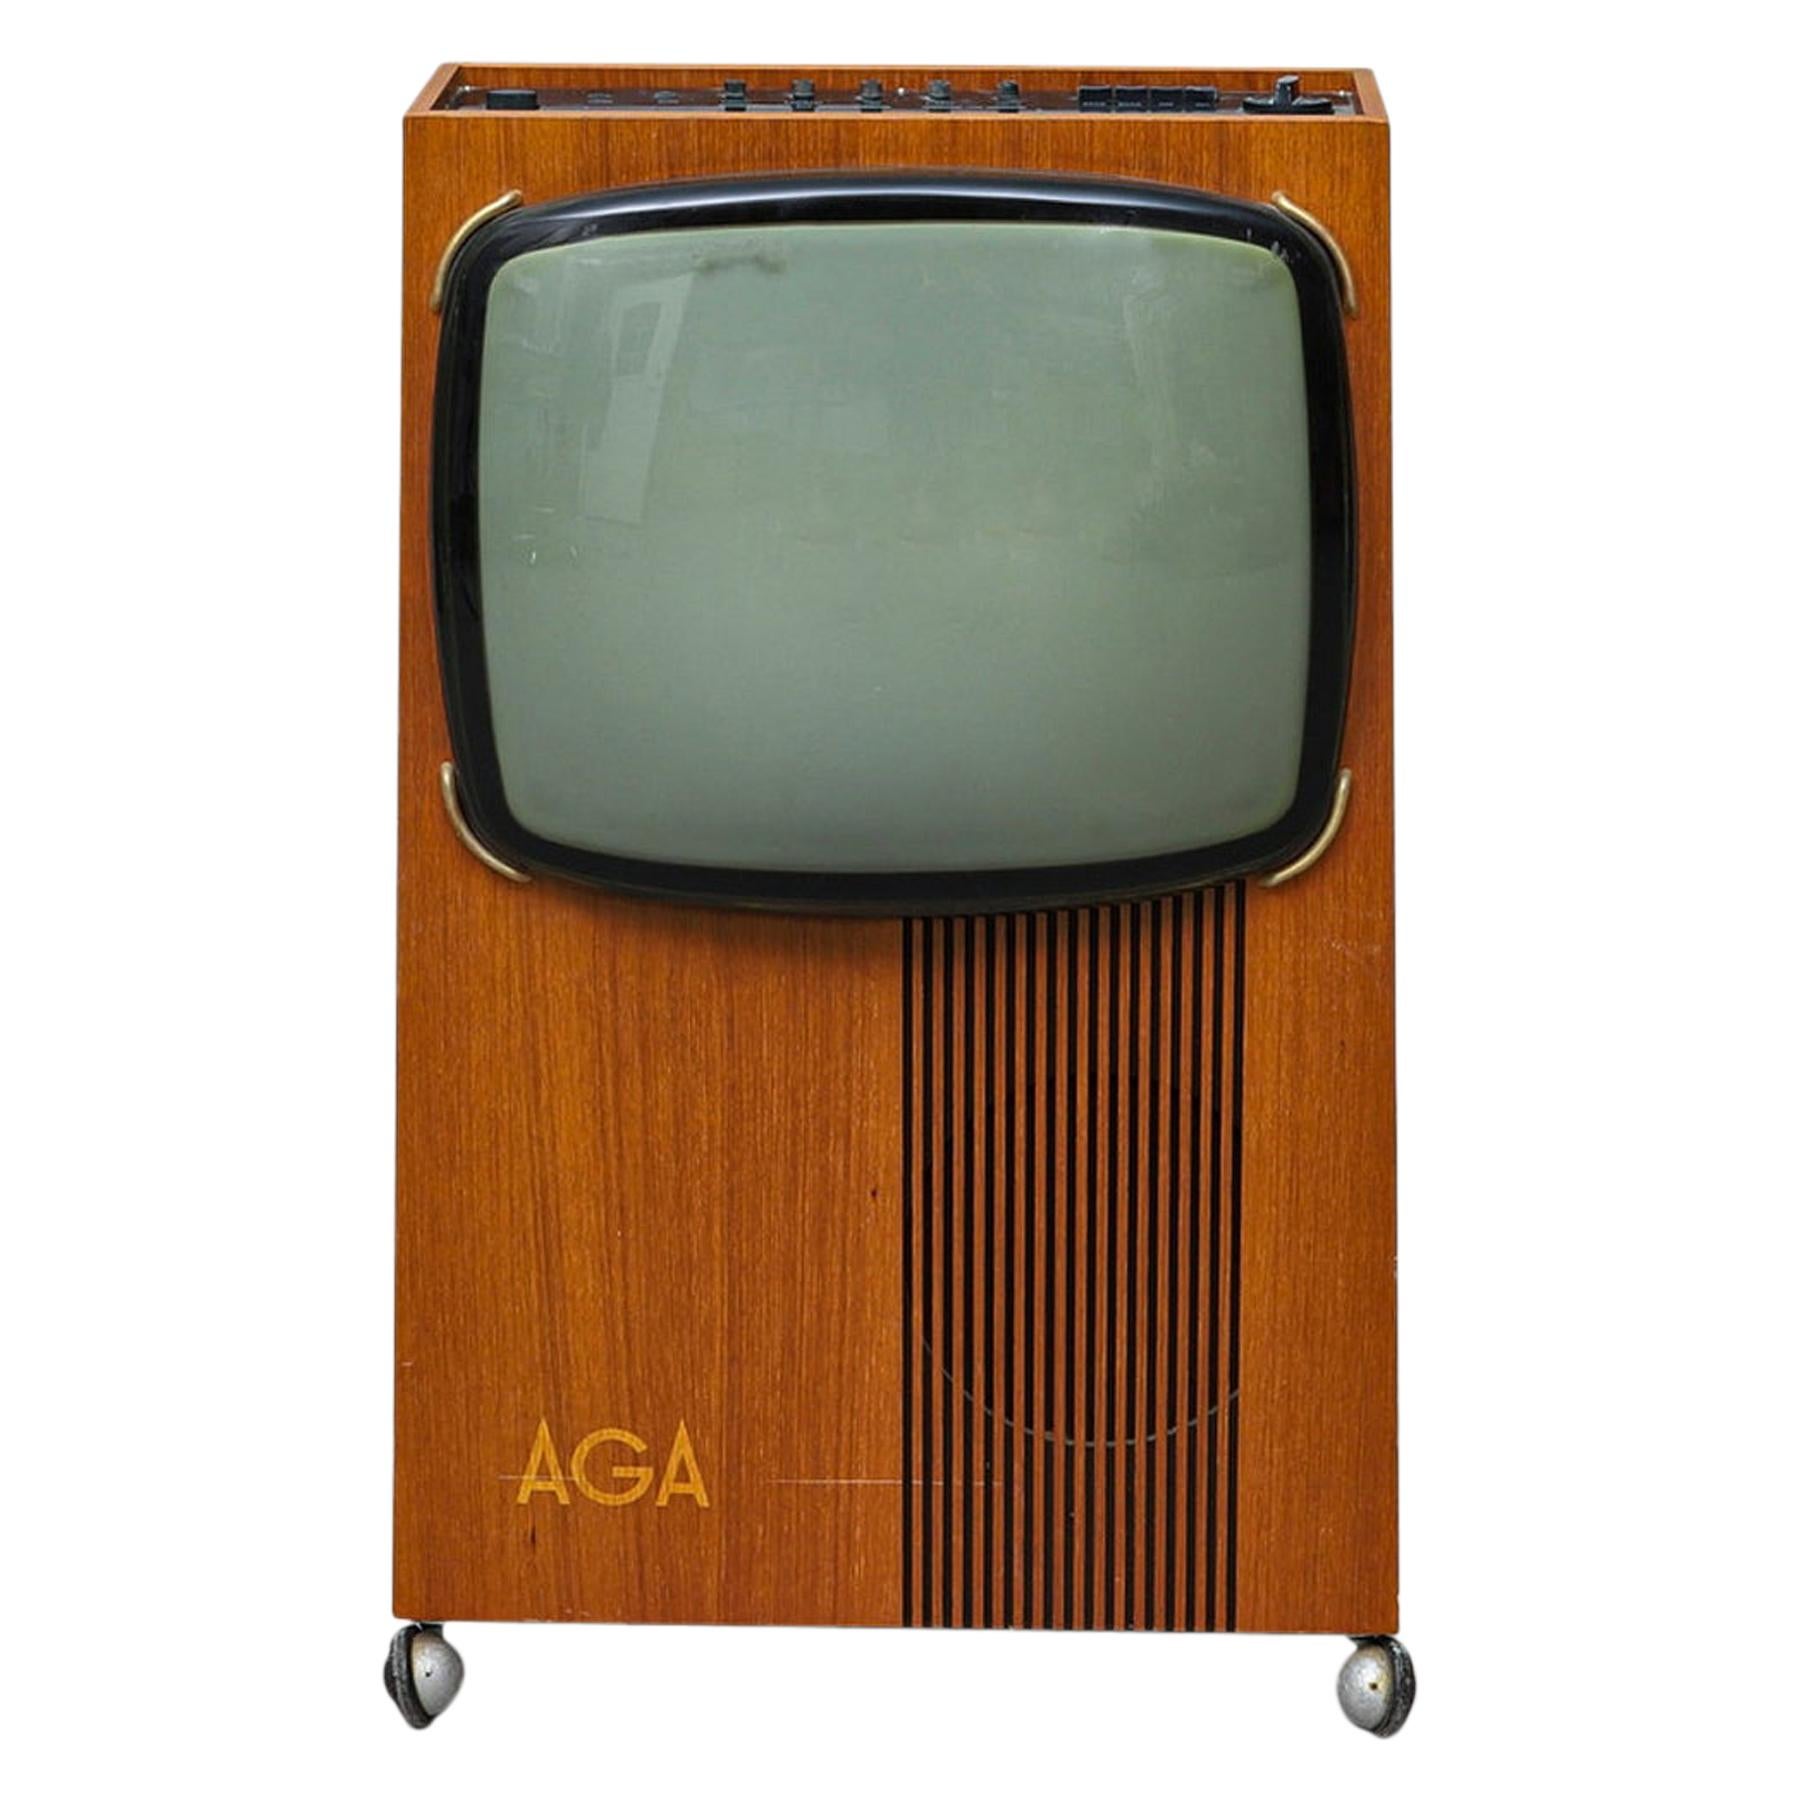 Aga Television by Bengt-johan Gullberg